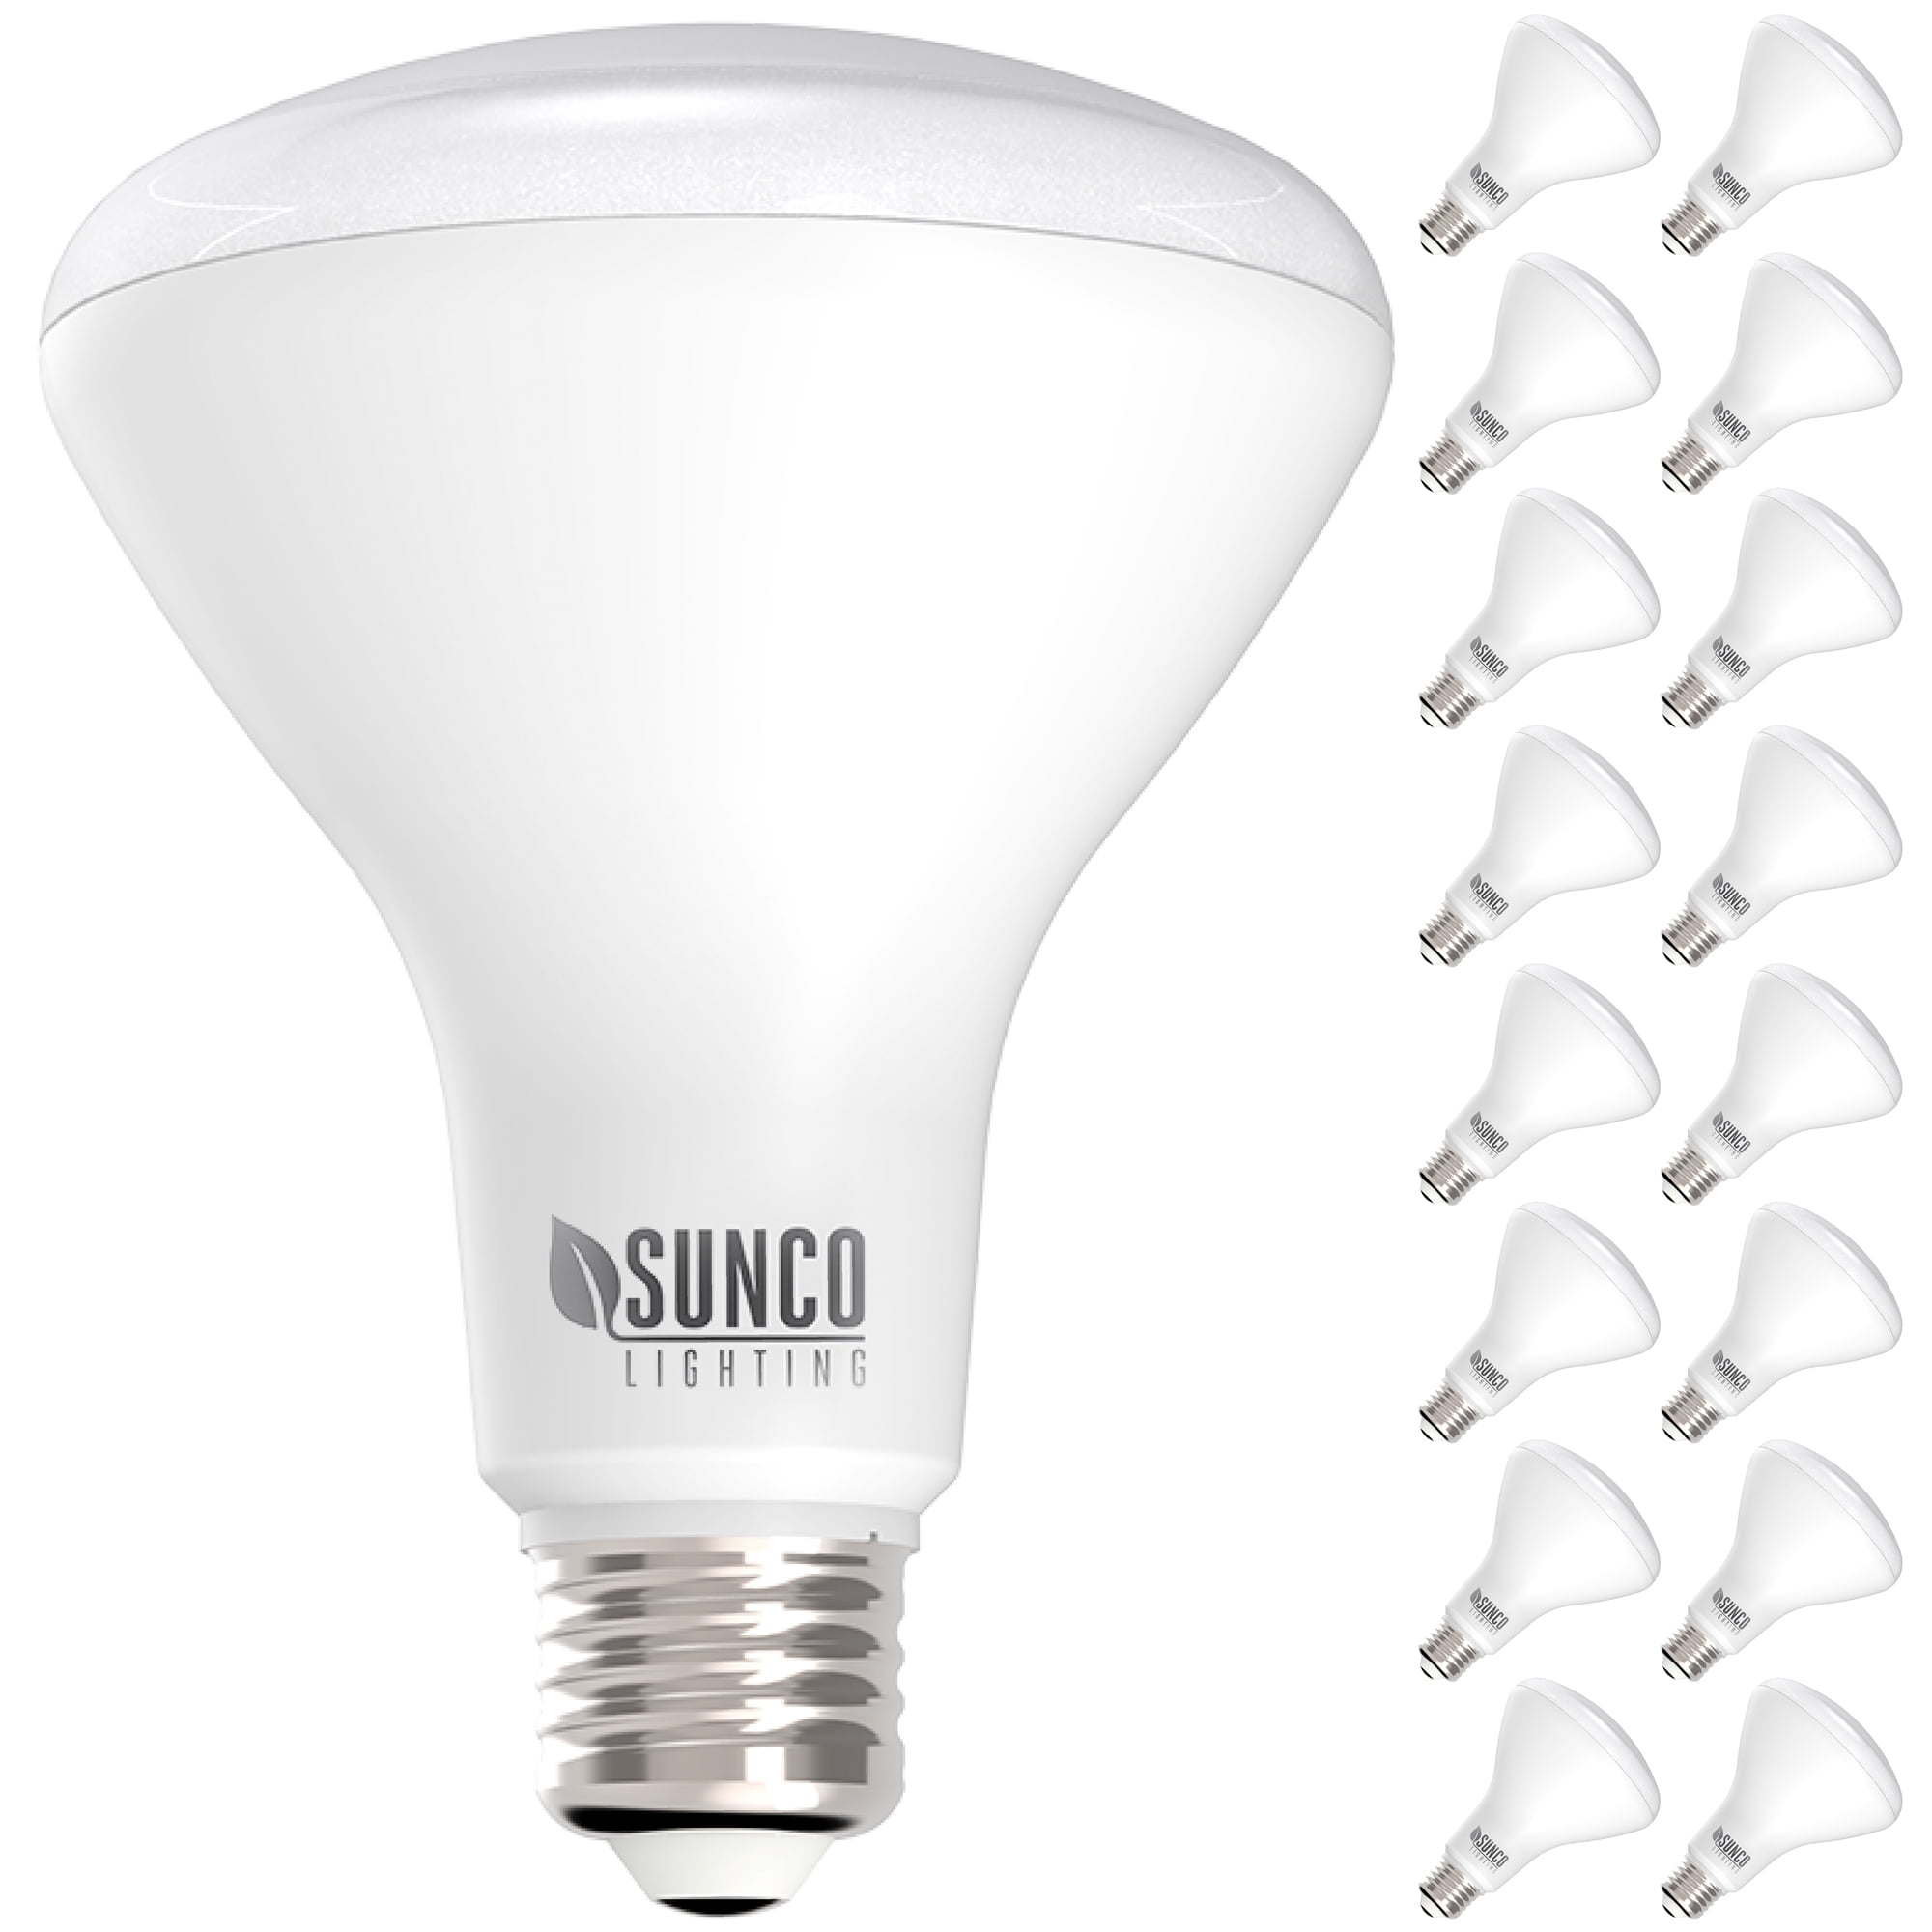 Sunco Lighting 8 Pack 6 Inch Slim Ultra-Thin Recessed Retrofit Kit LED 5000K 